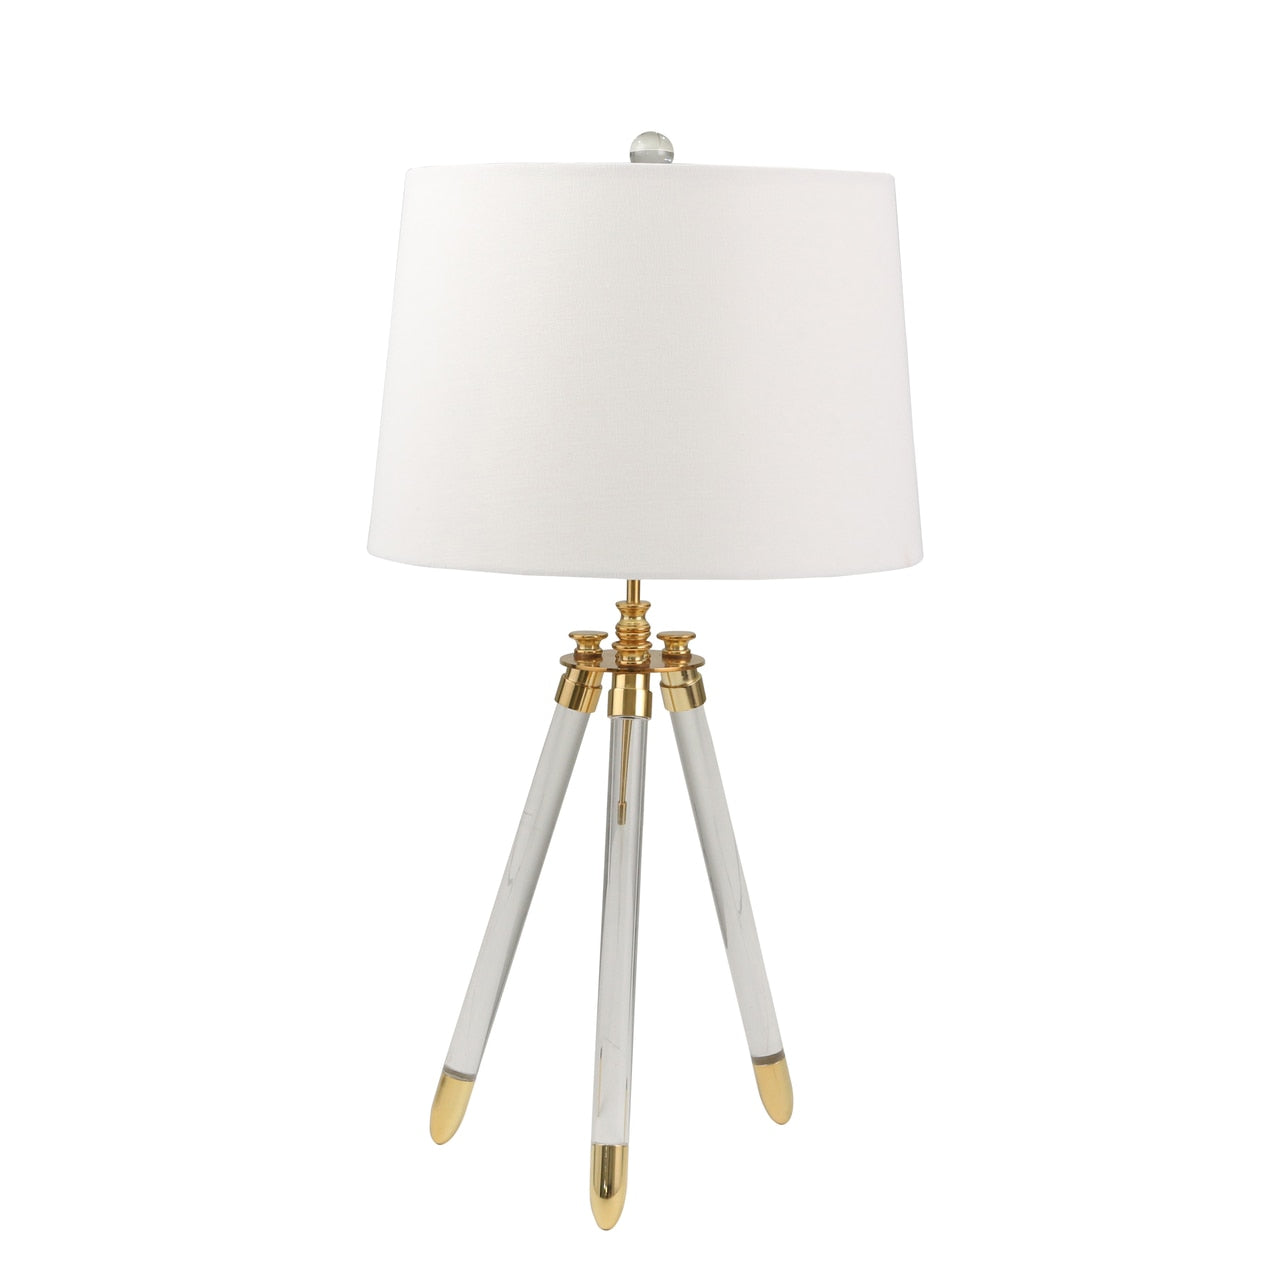 Acrylic Tripod Table Lamp - Gold